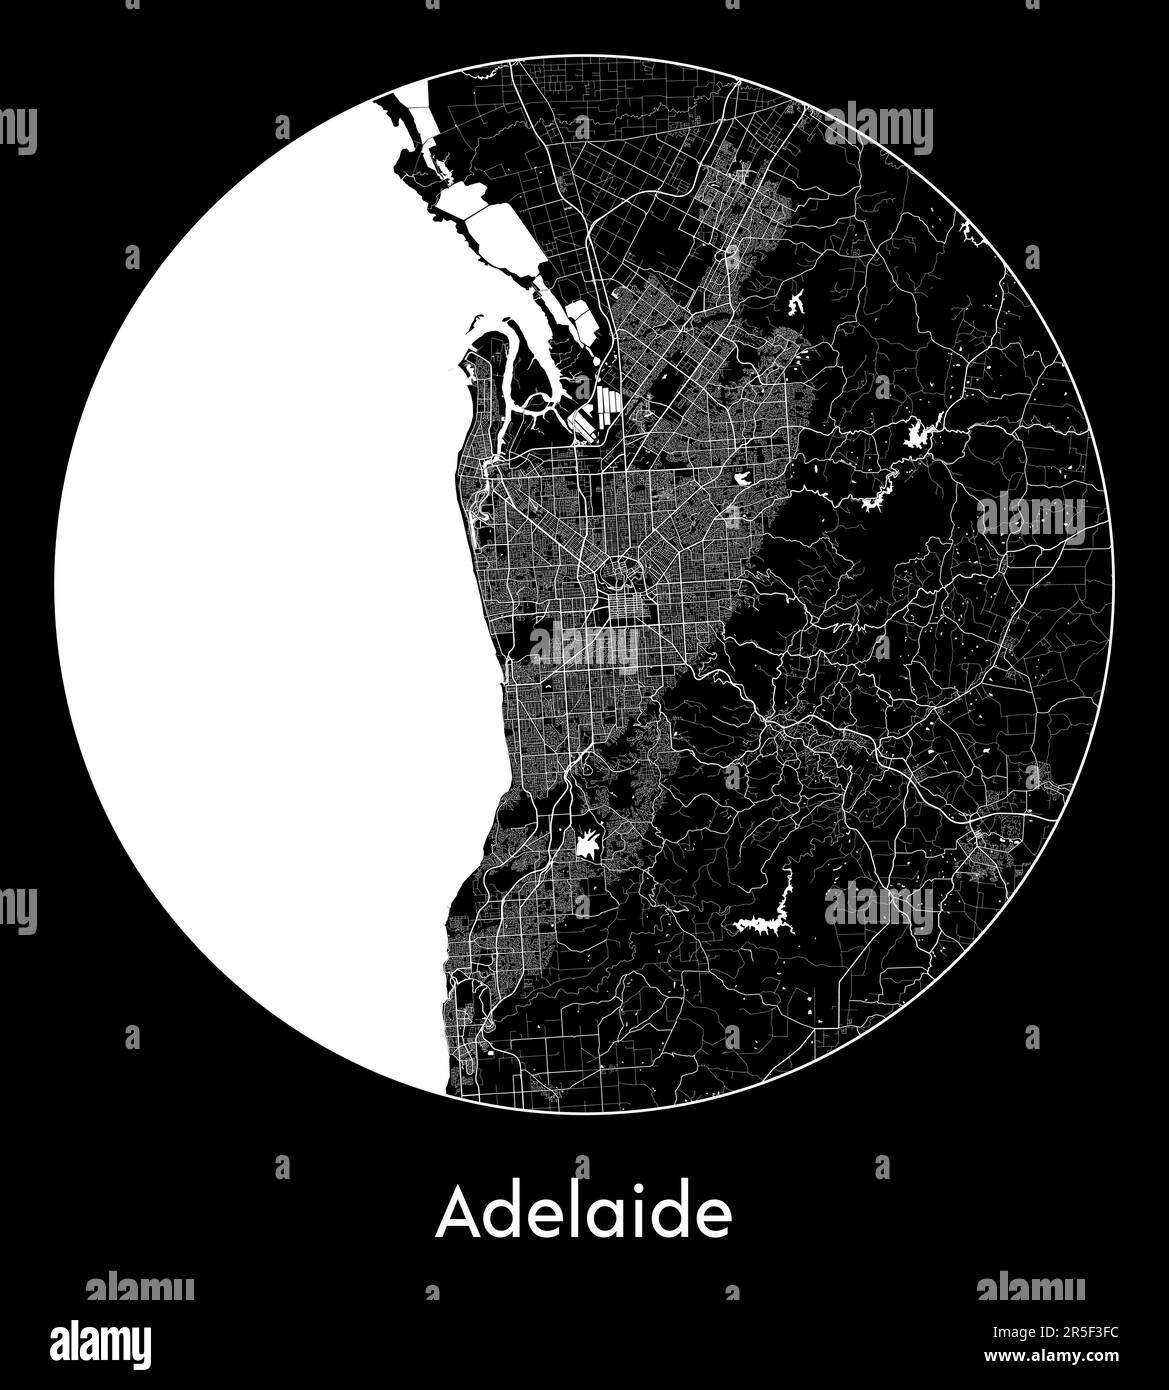 City Map Adelaide Australia vector illustration Stock Vector